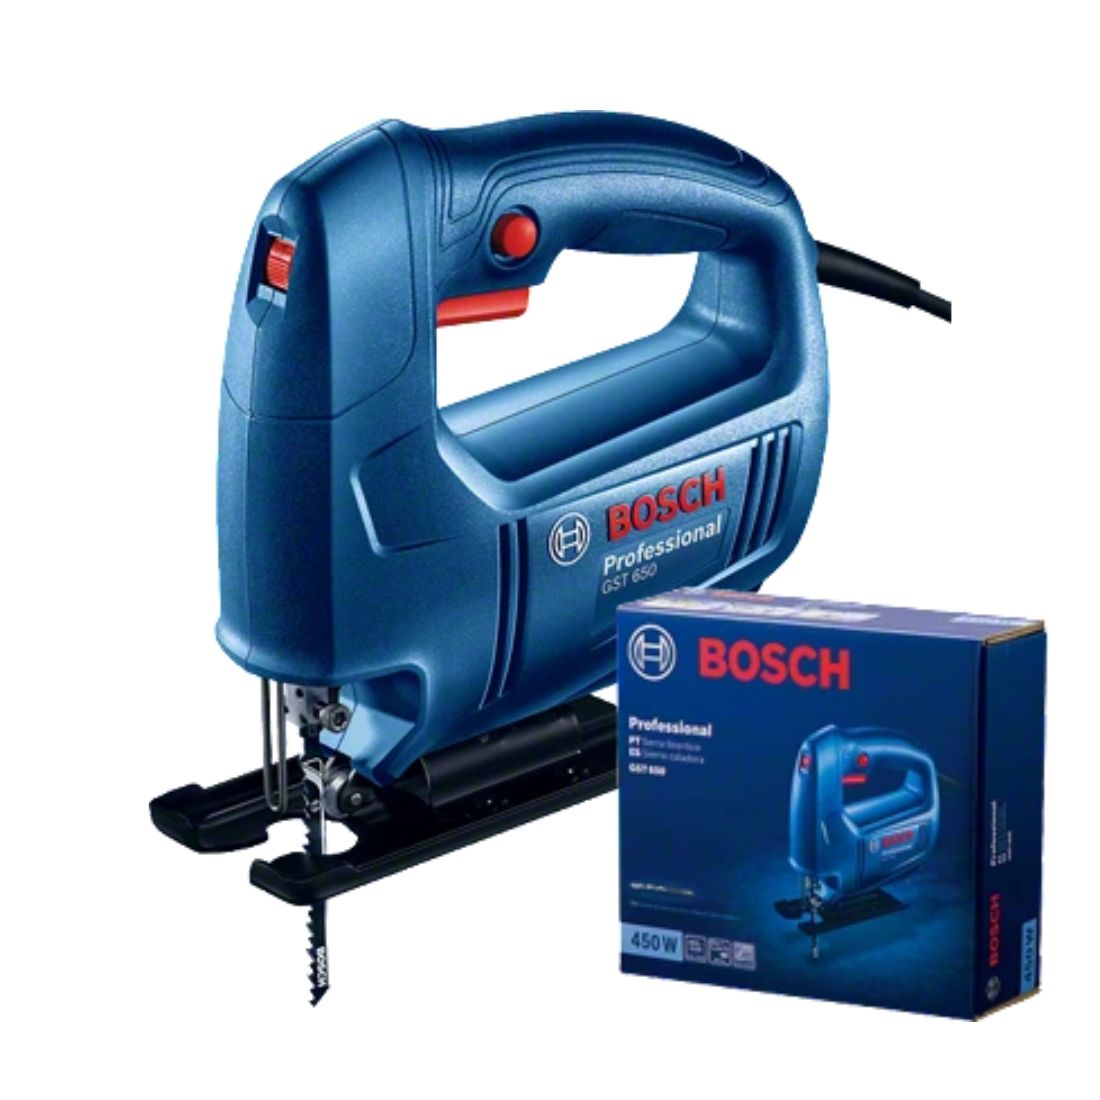 Bosch (GST 650) Electric Jigsaw, 450W